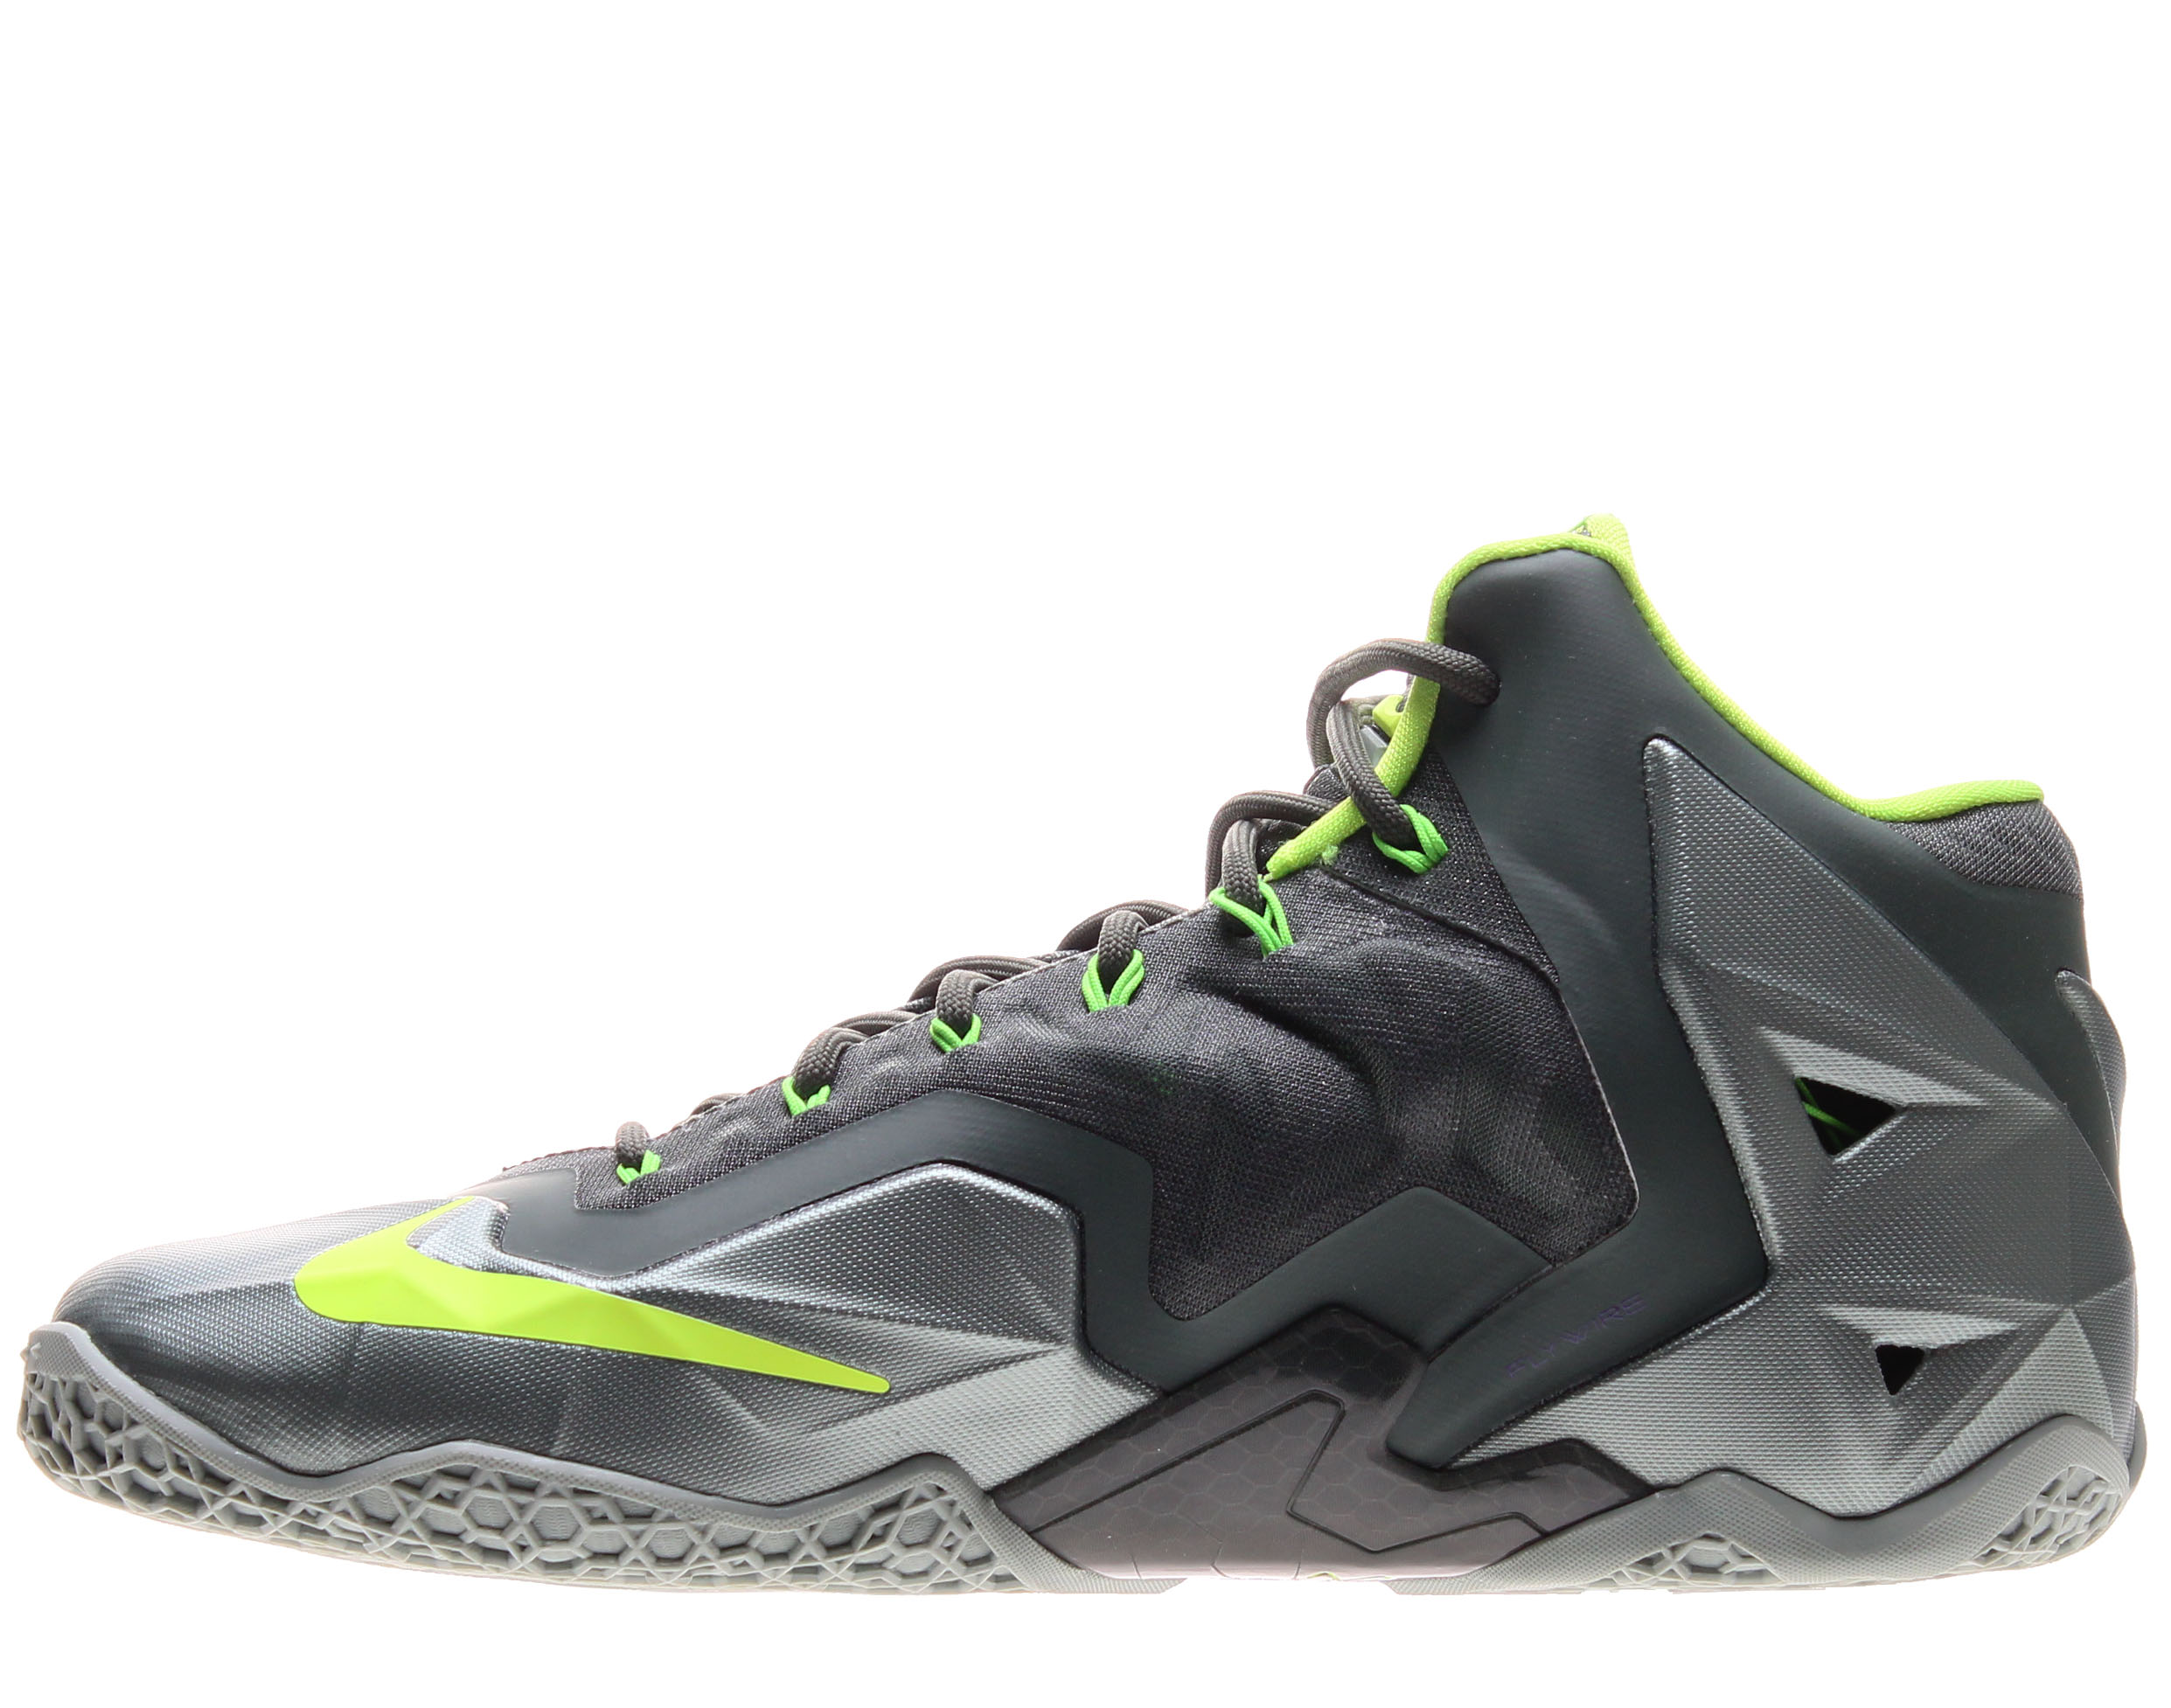 Nike Lebron XI Men's Basketball Shoes MC Green/Spray-Dark MC Green/Volt 616175-300 (12 D(M) US) - image 3 of 6